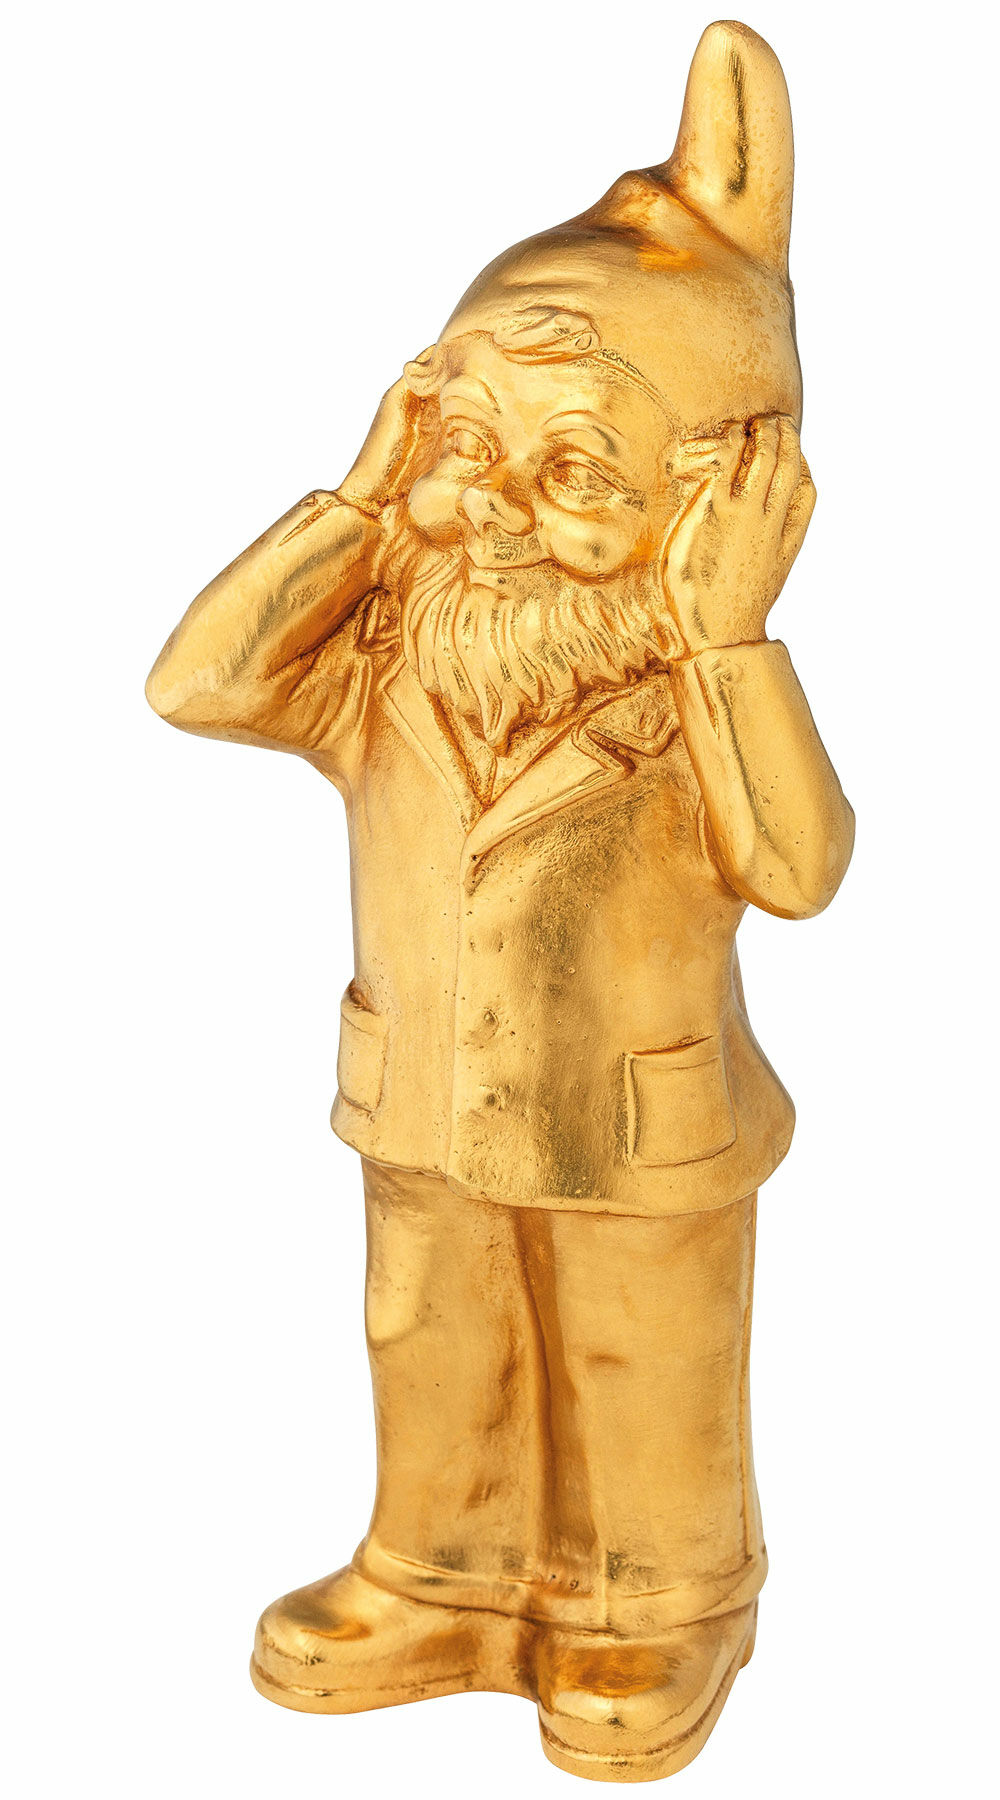 Skulptur "Geheimnisträger - Nichts hören", Version vergoldet von Ottmar Hörl